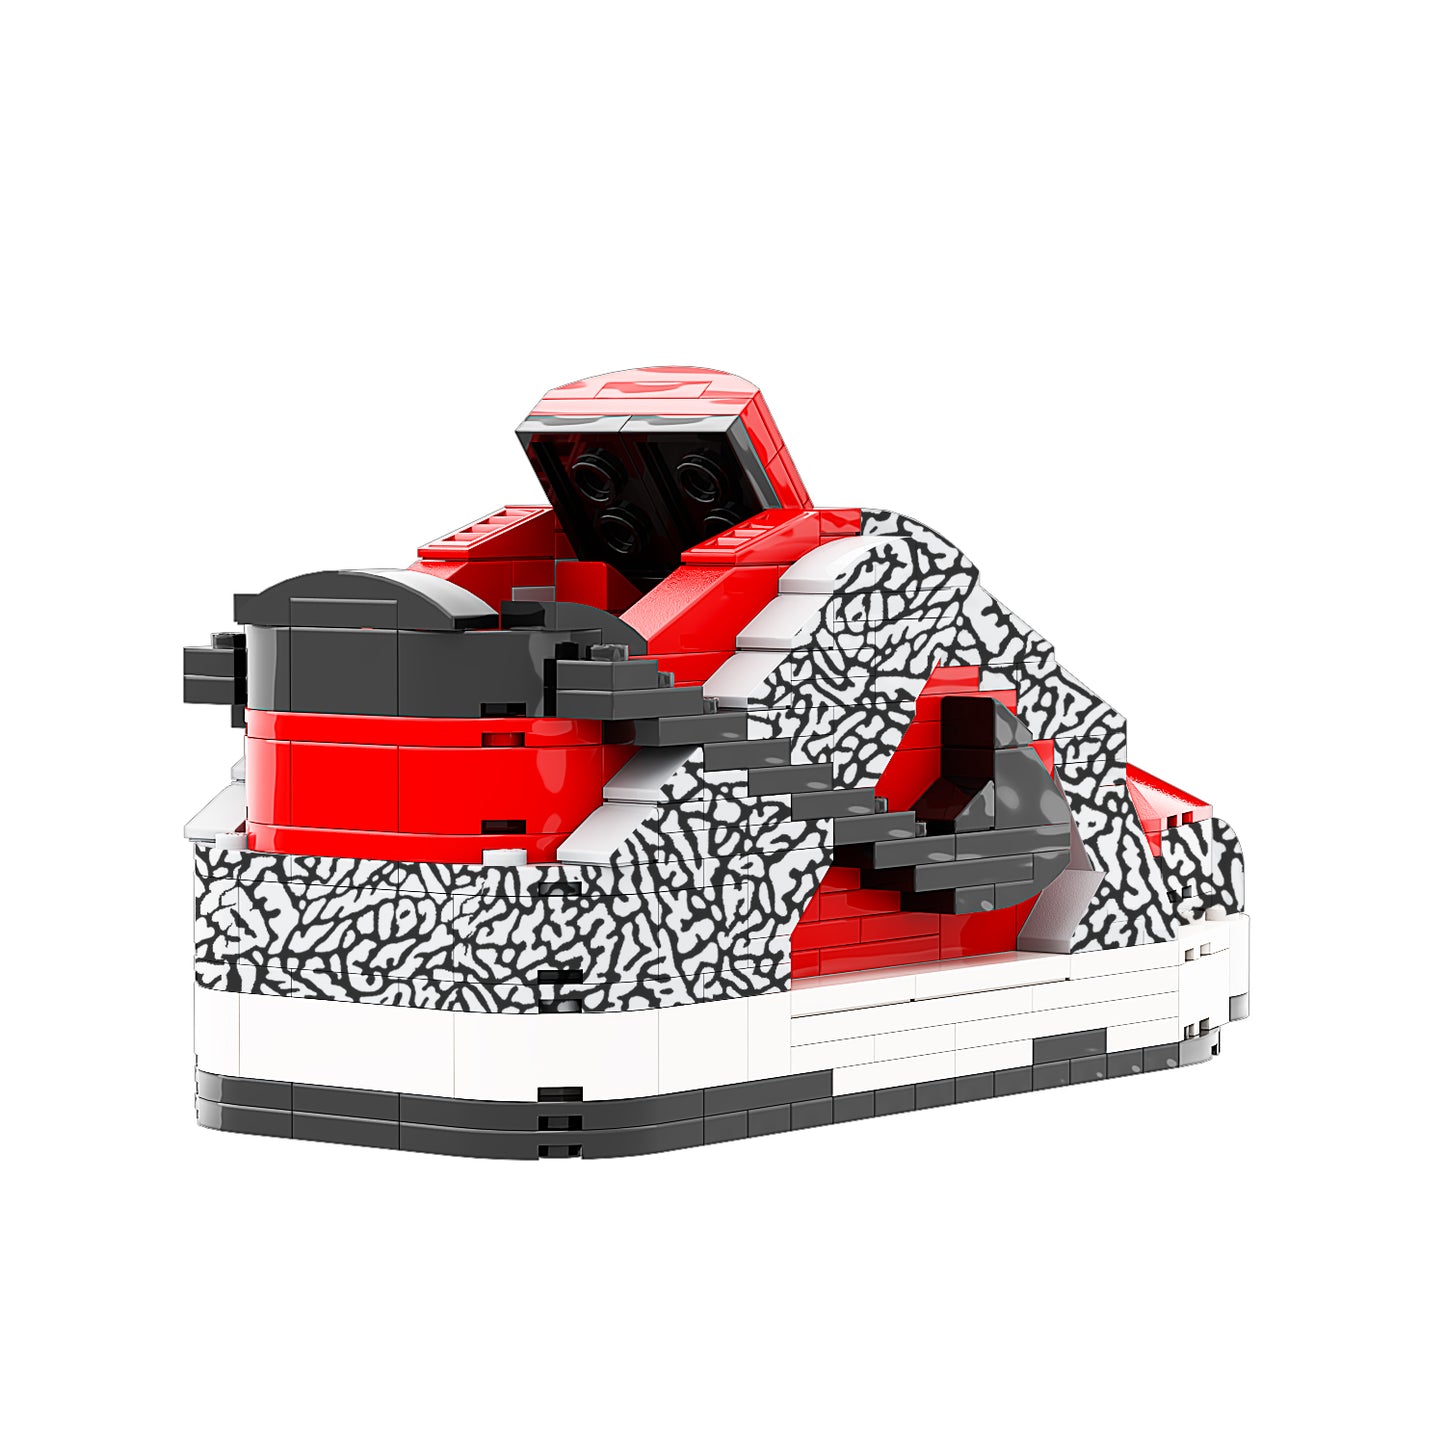 REGULAR SB Dunk SUP "Red Cement" Sneaker Bricks with Mini Figure